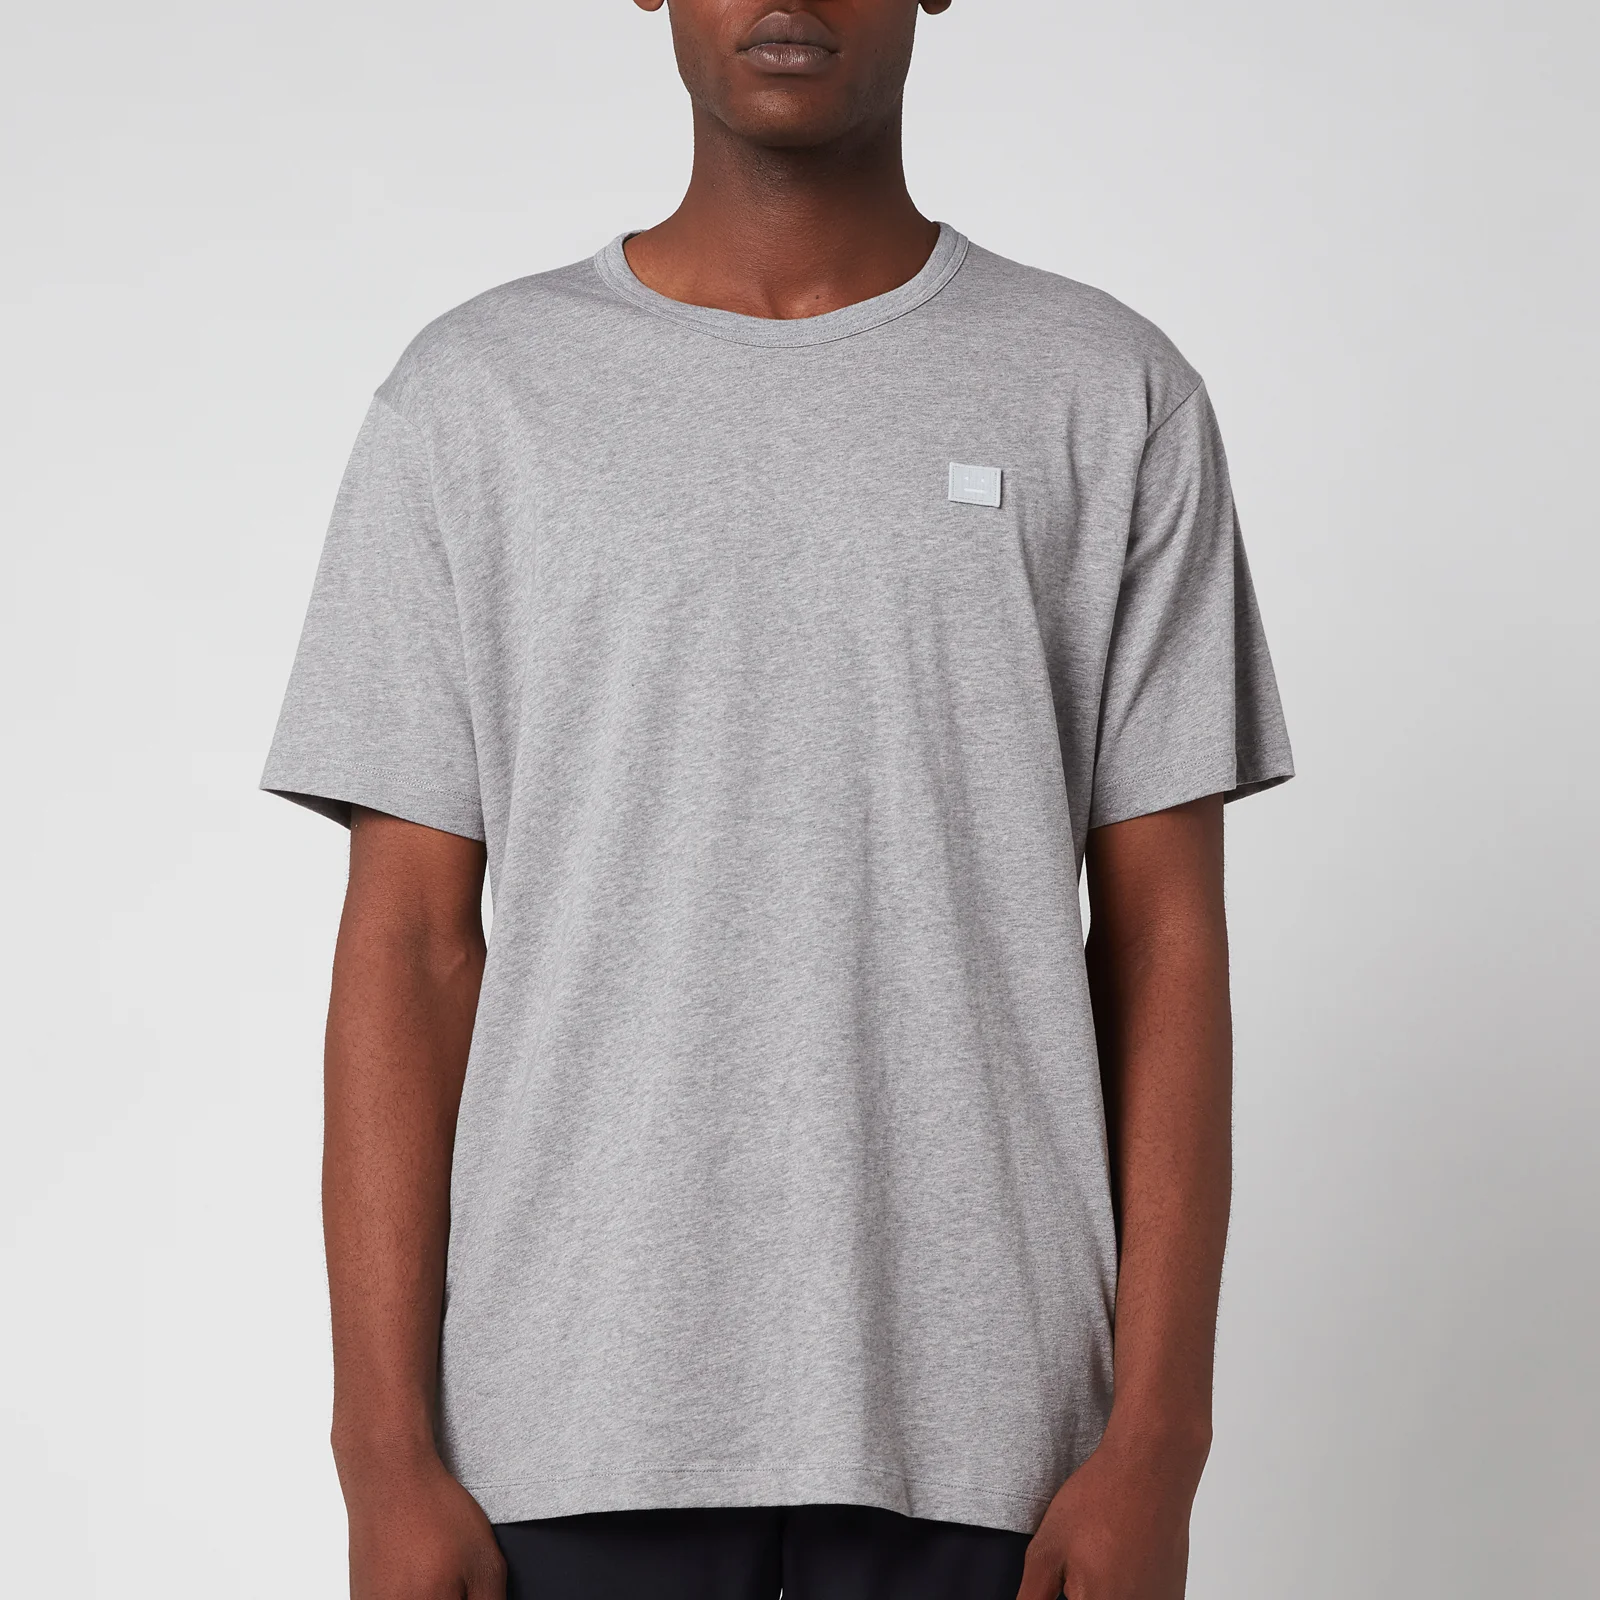 Acne Studios Men's Regular Fit Face Patch T-Shirt - Light Grey Melange Image 1